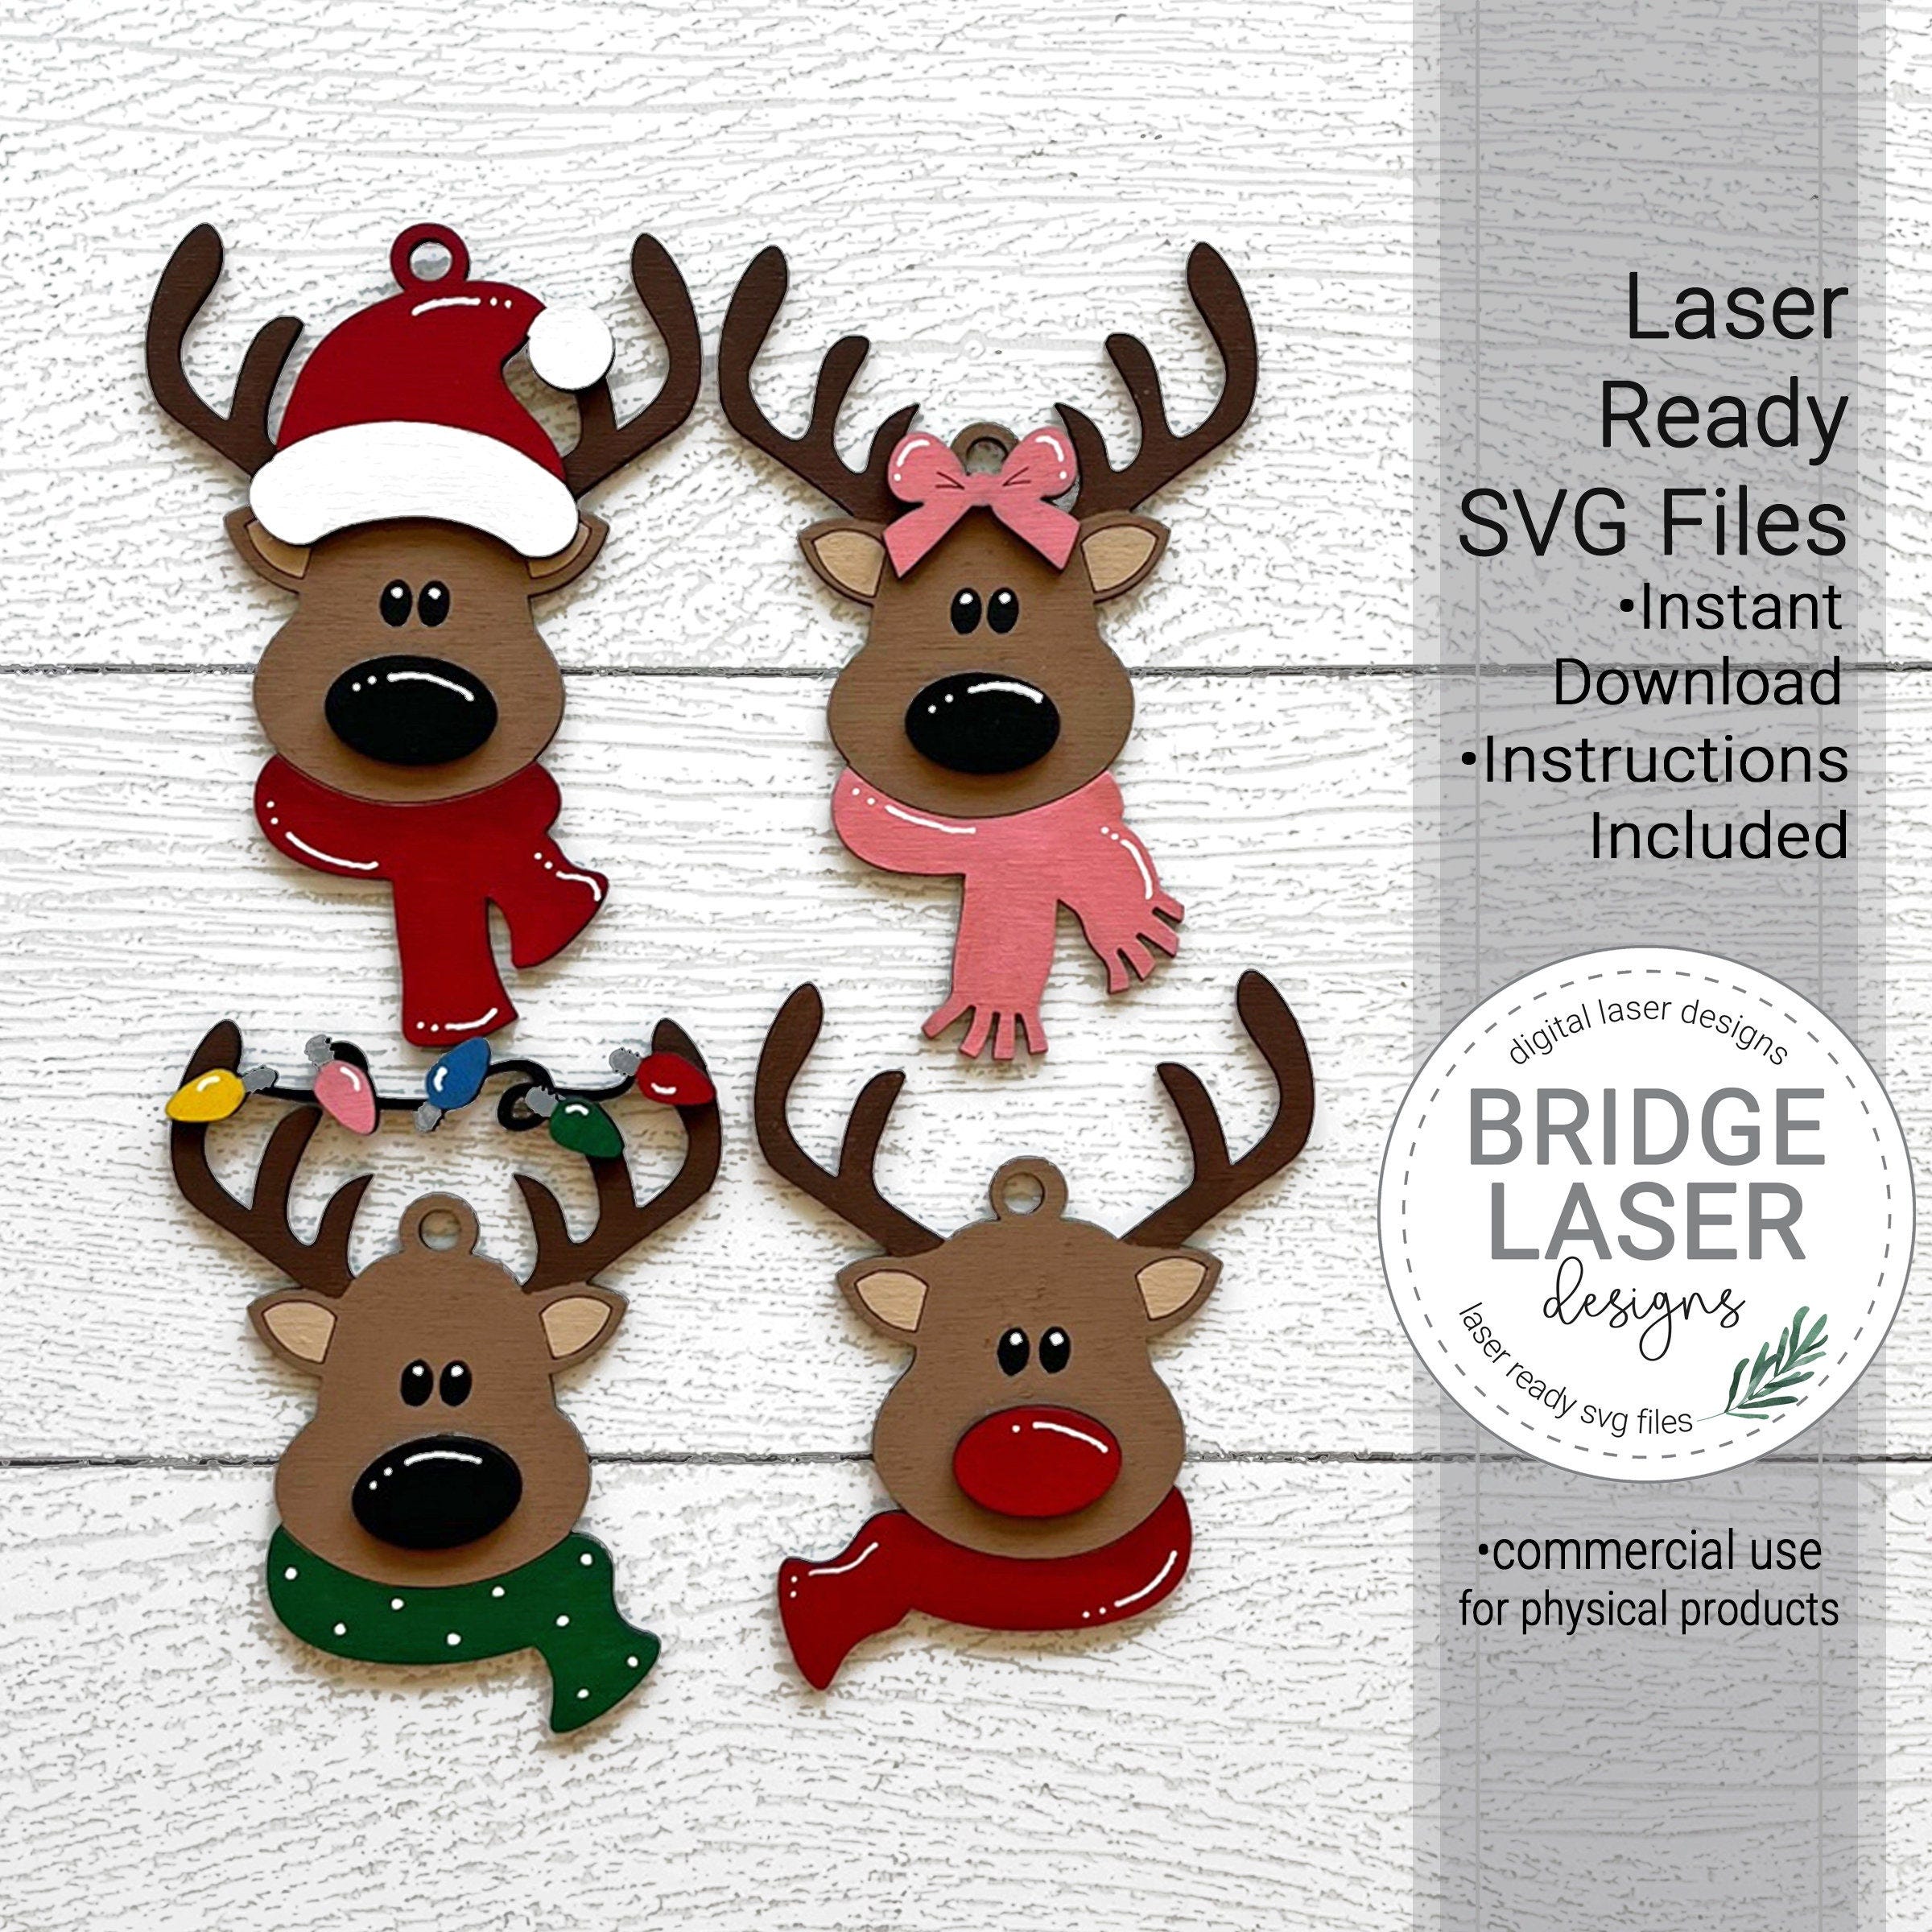 Reindeer Ornament Laser File, Christmas Ornament SVG, Reindeer Laser SVG, Christmas Laser Files, Christmas Laser SVG, Laser Ornaments Files